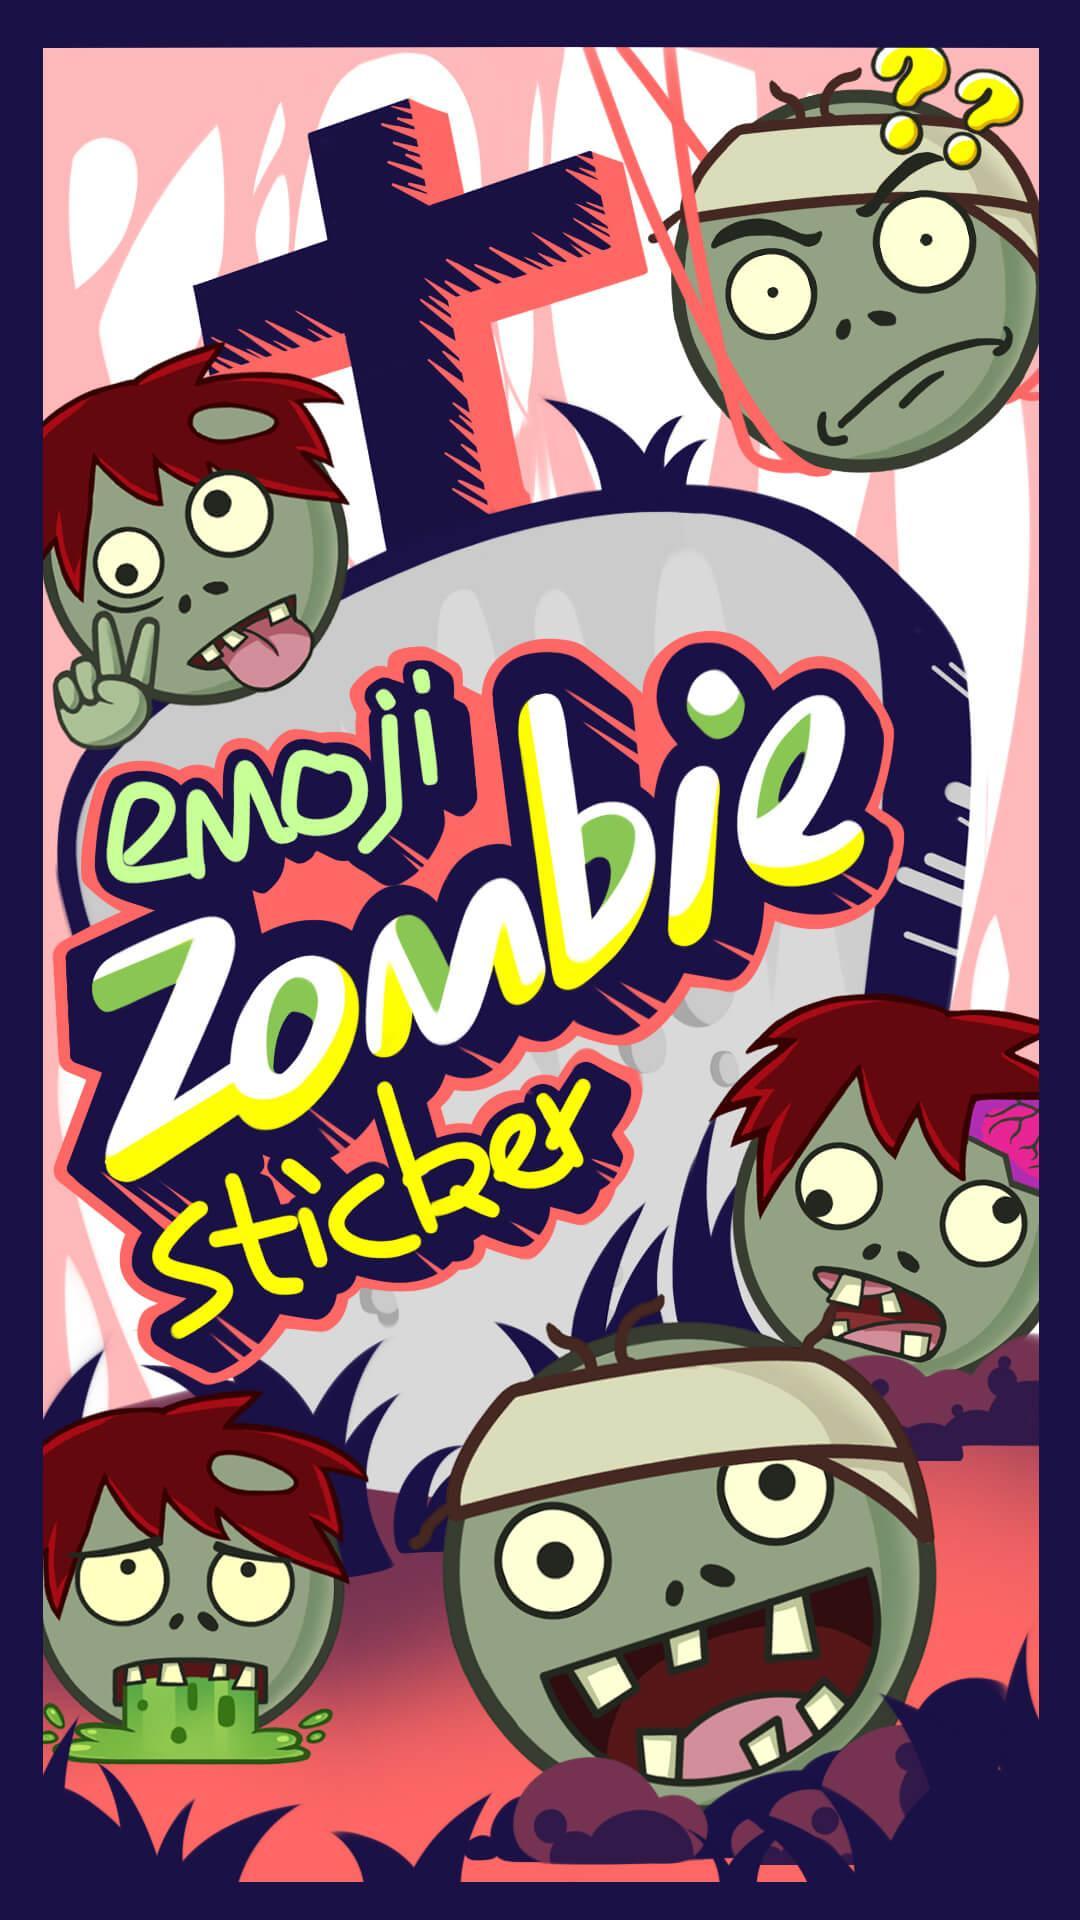 Whatsapp zombie stickers